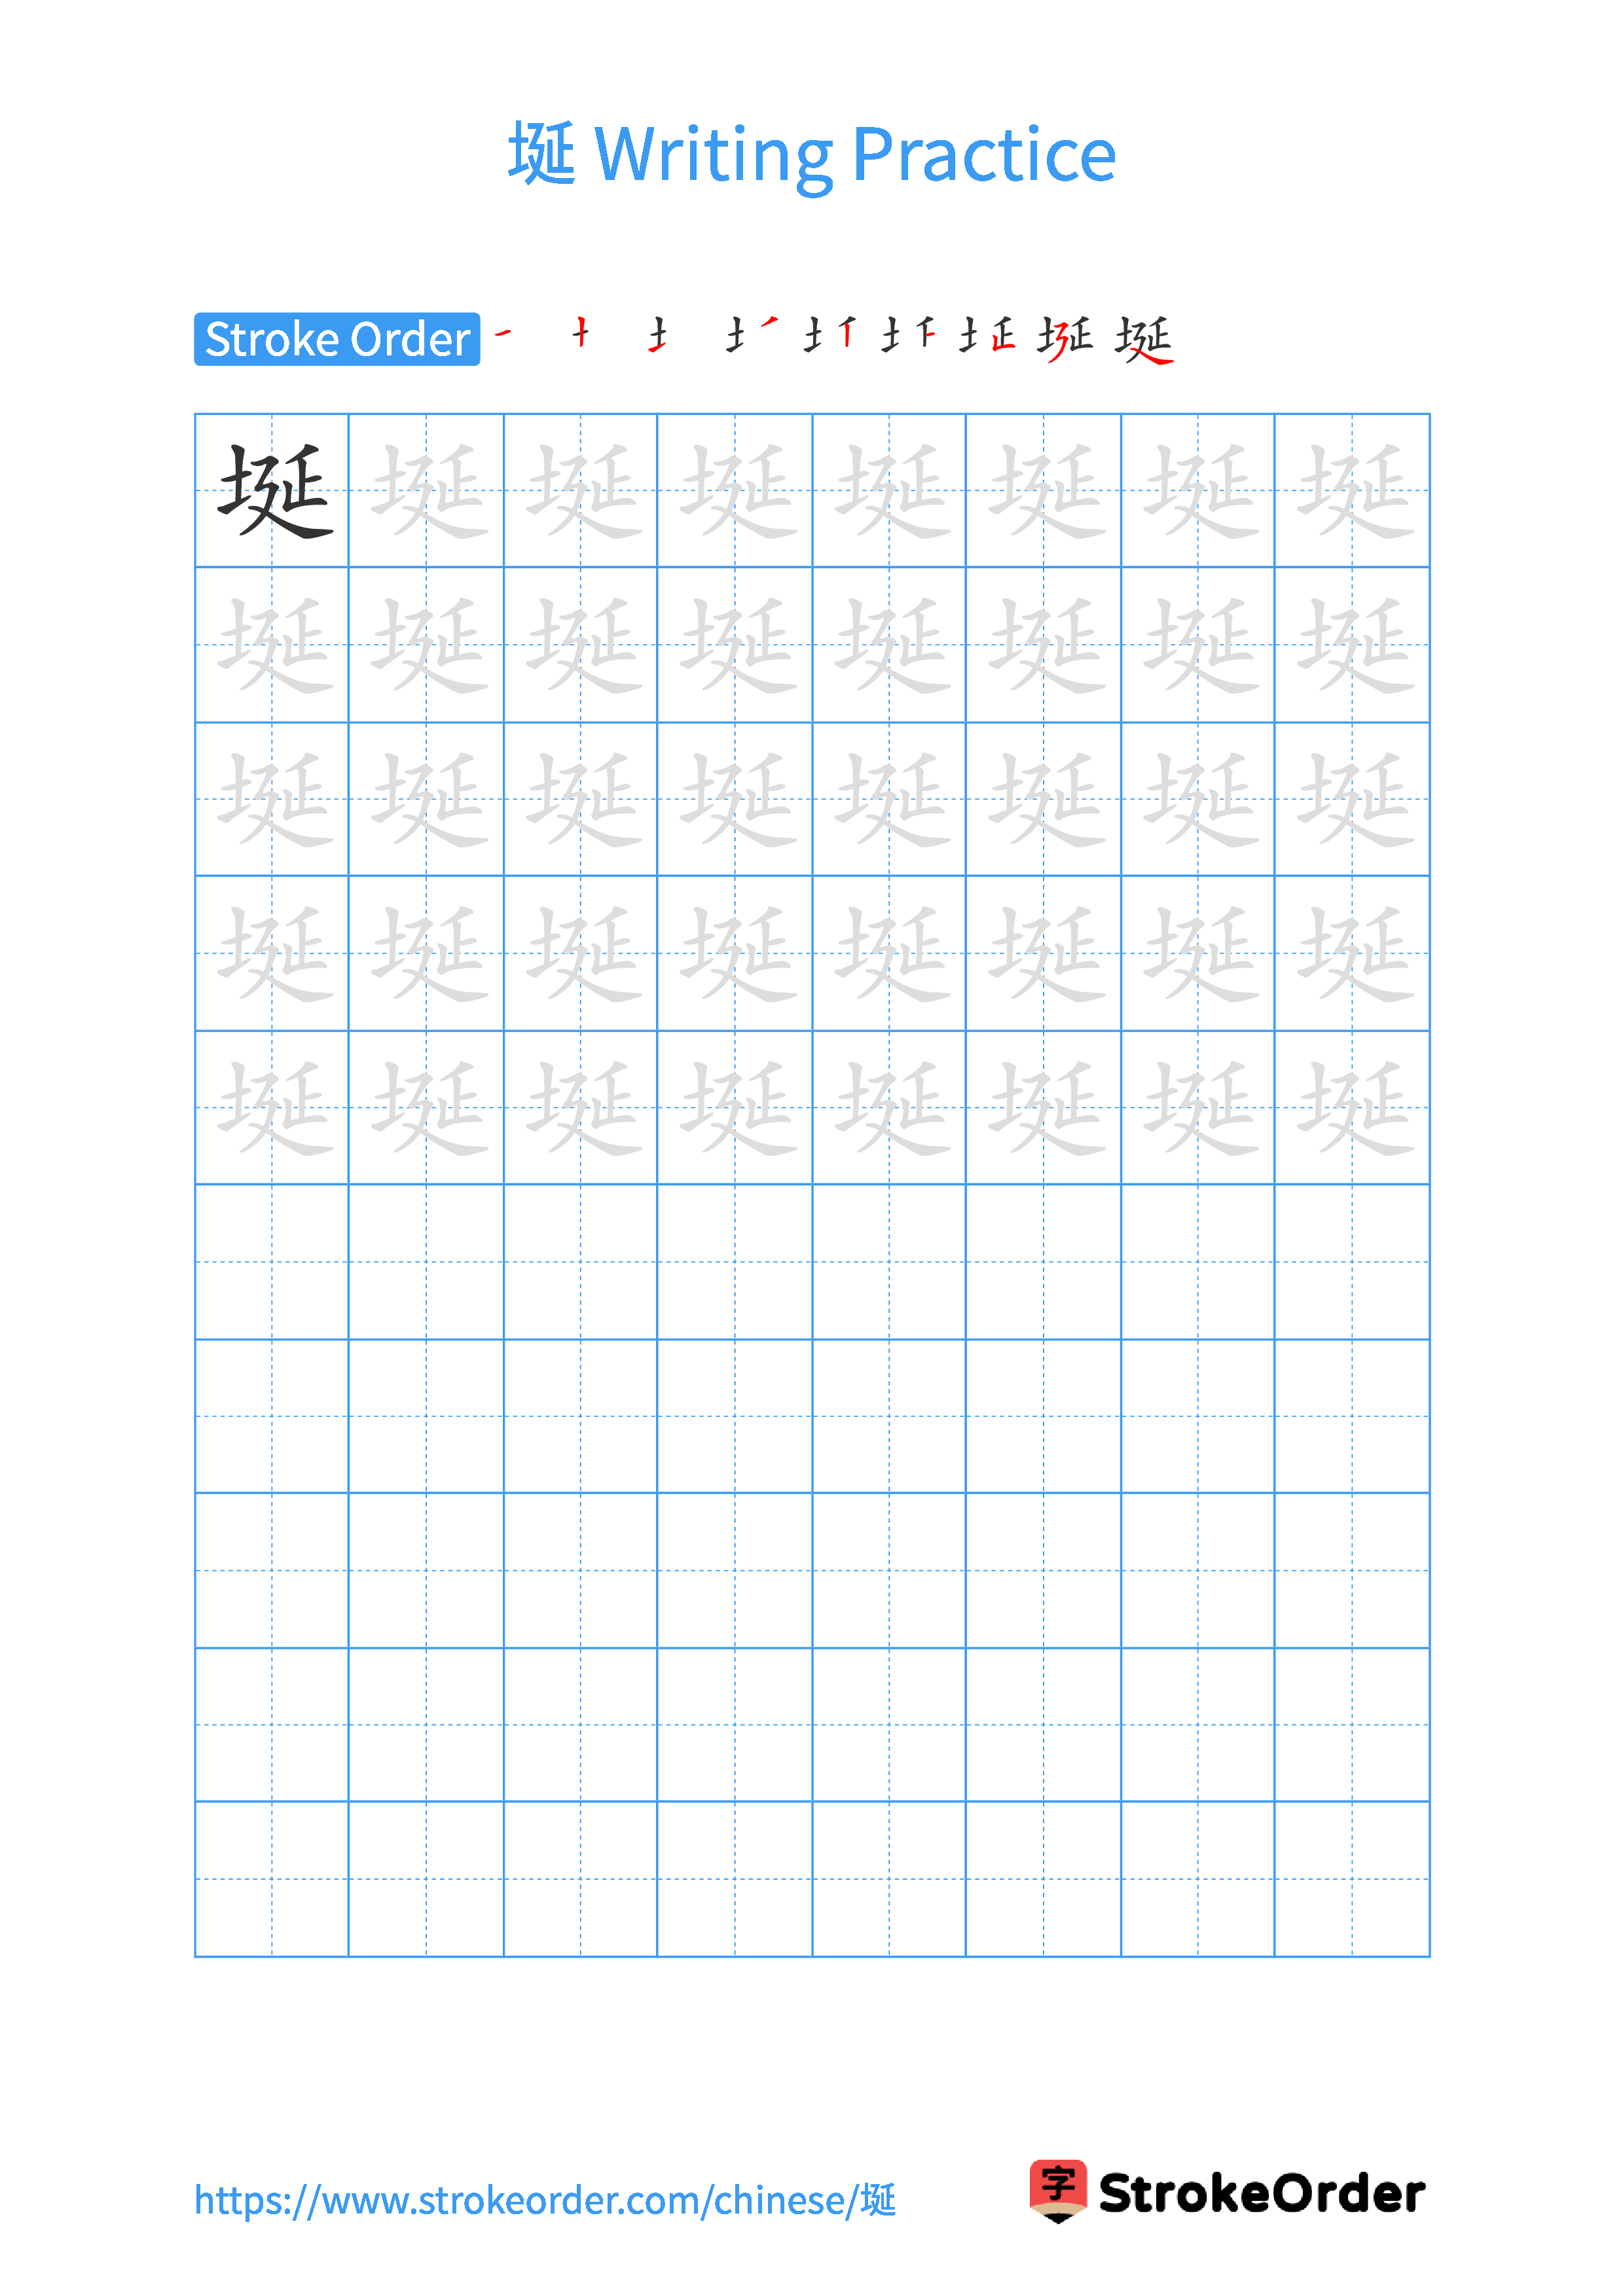 Printable Handwriting Practice Worksheet of the Chinese character 埏 in Portrait Orientation (Tian Zi Ge)